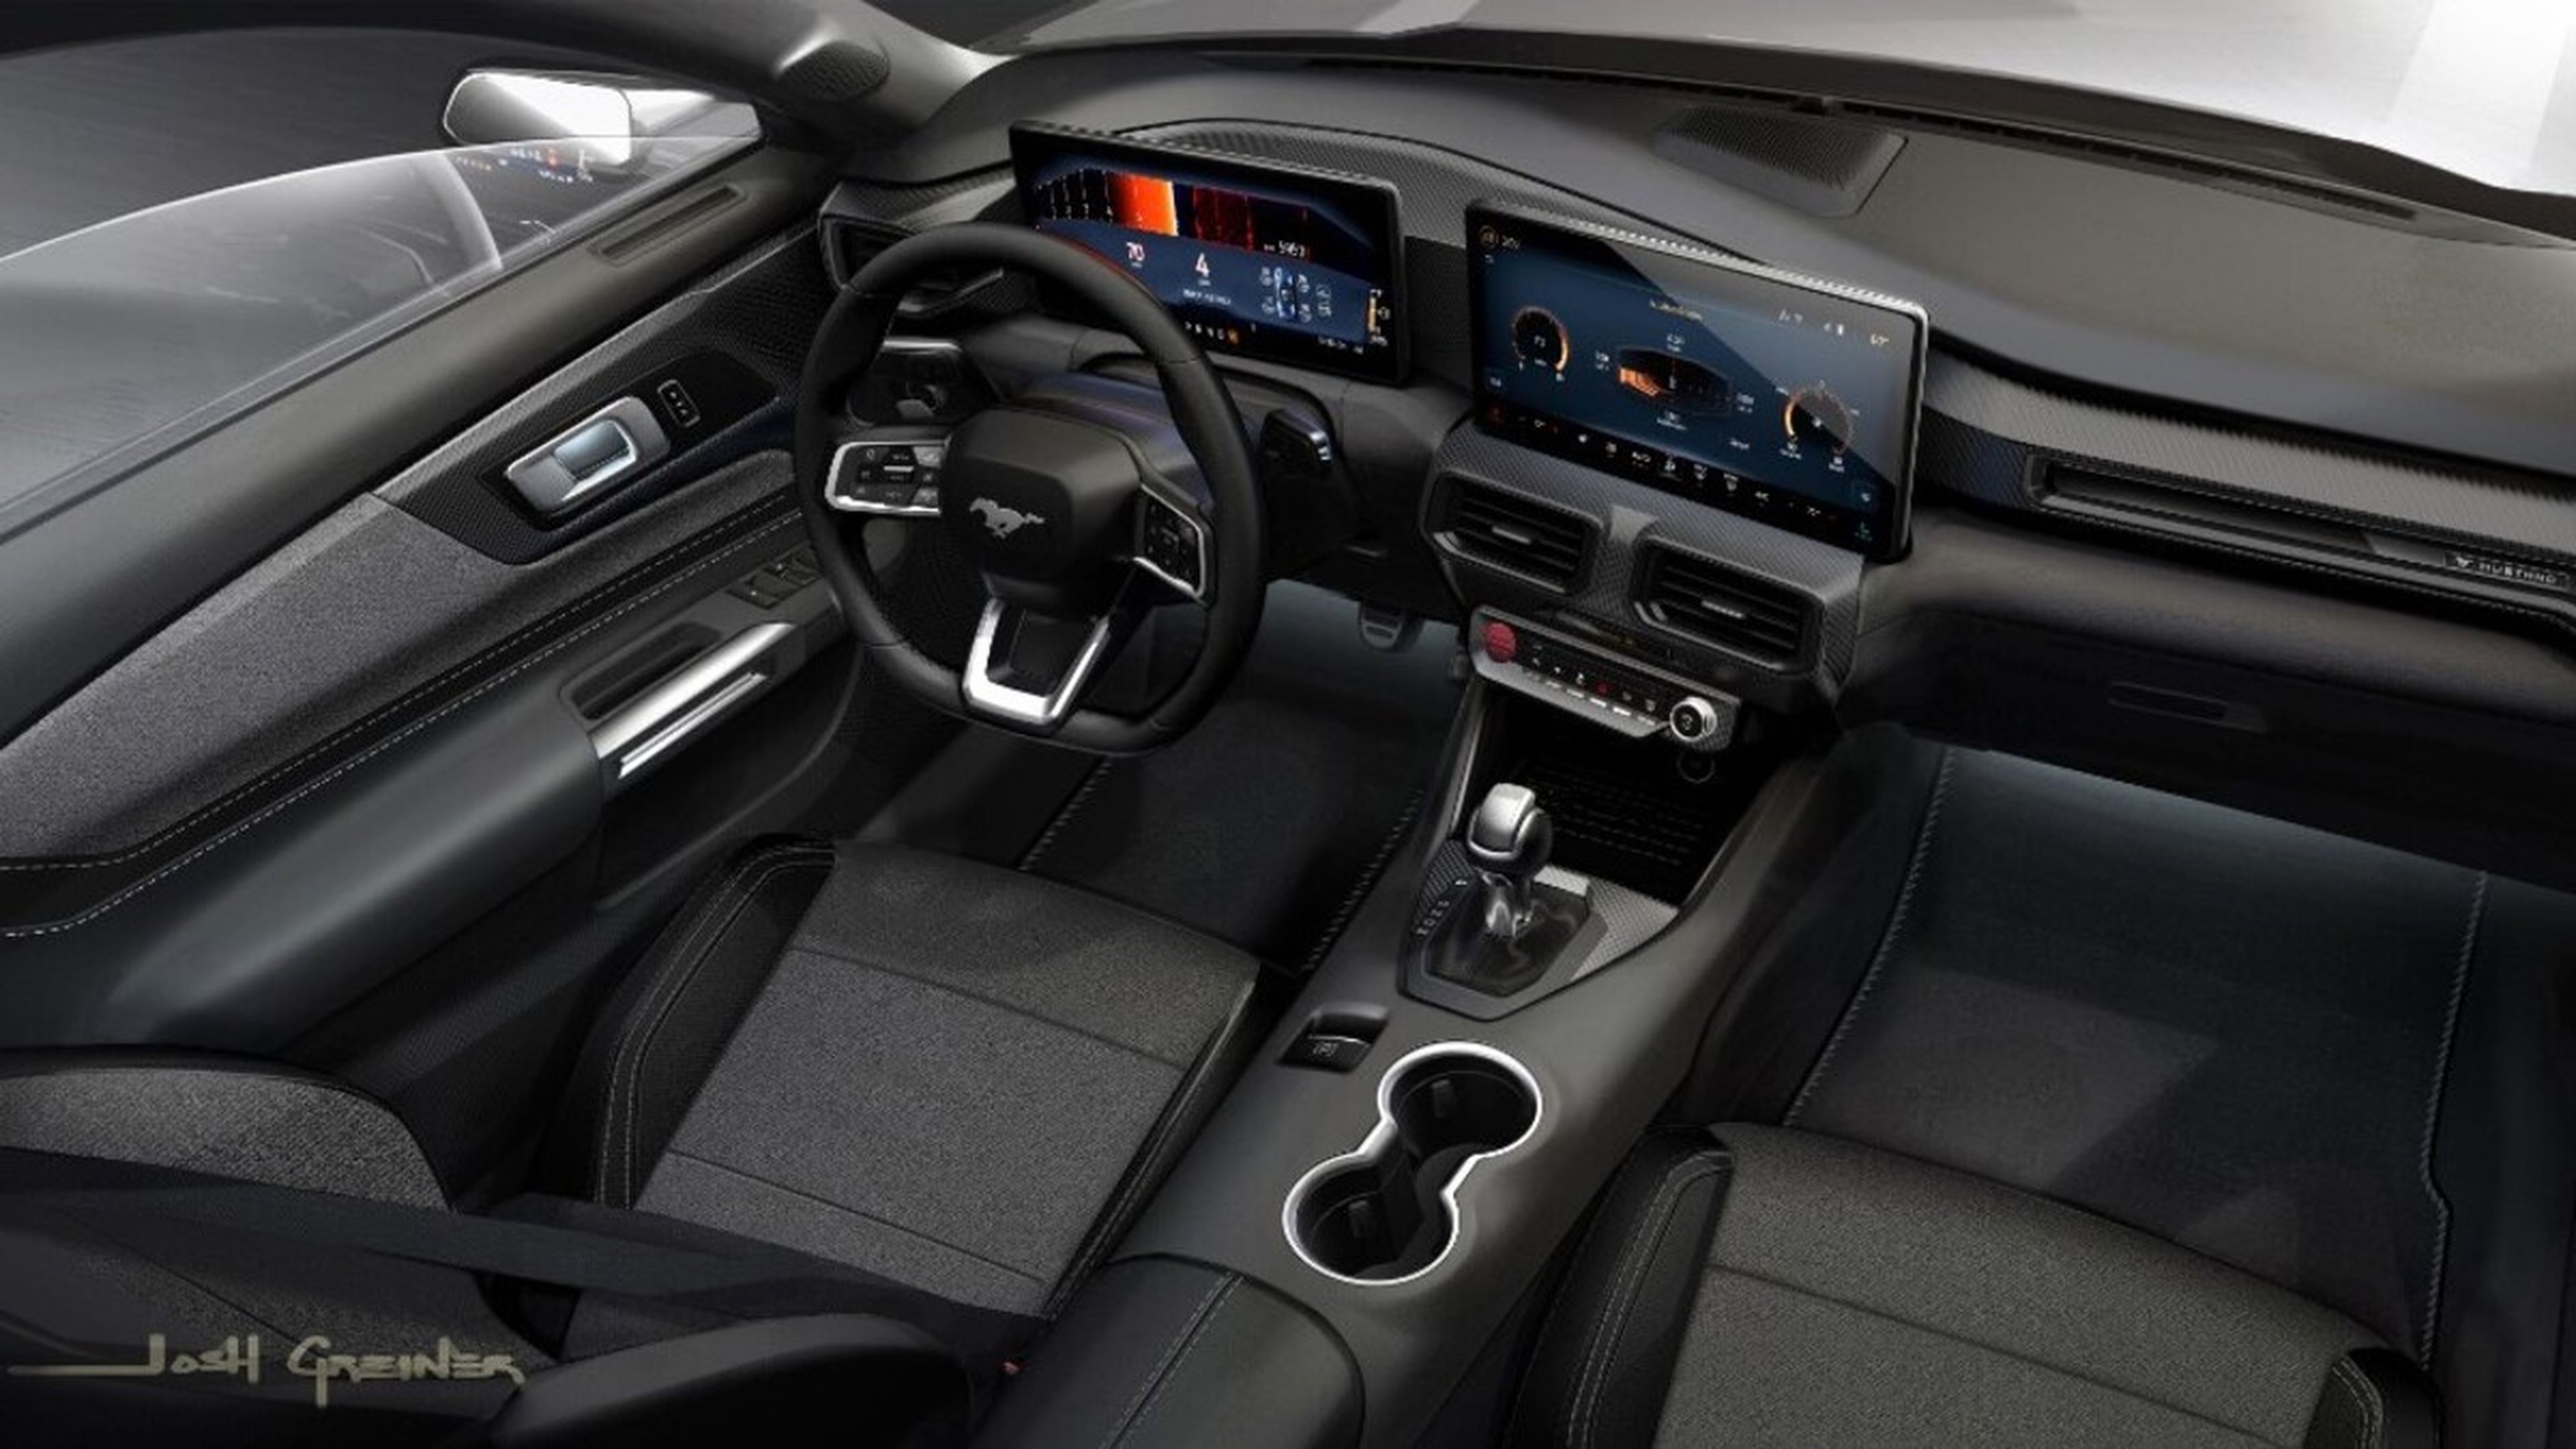 Posible interior del Ford Mustang base